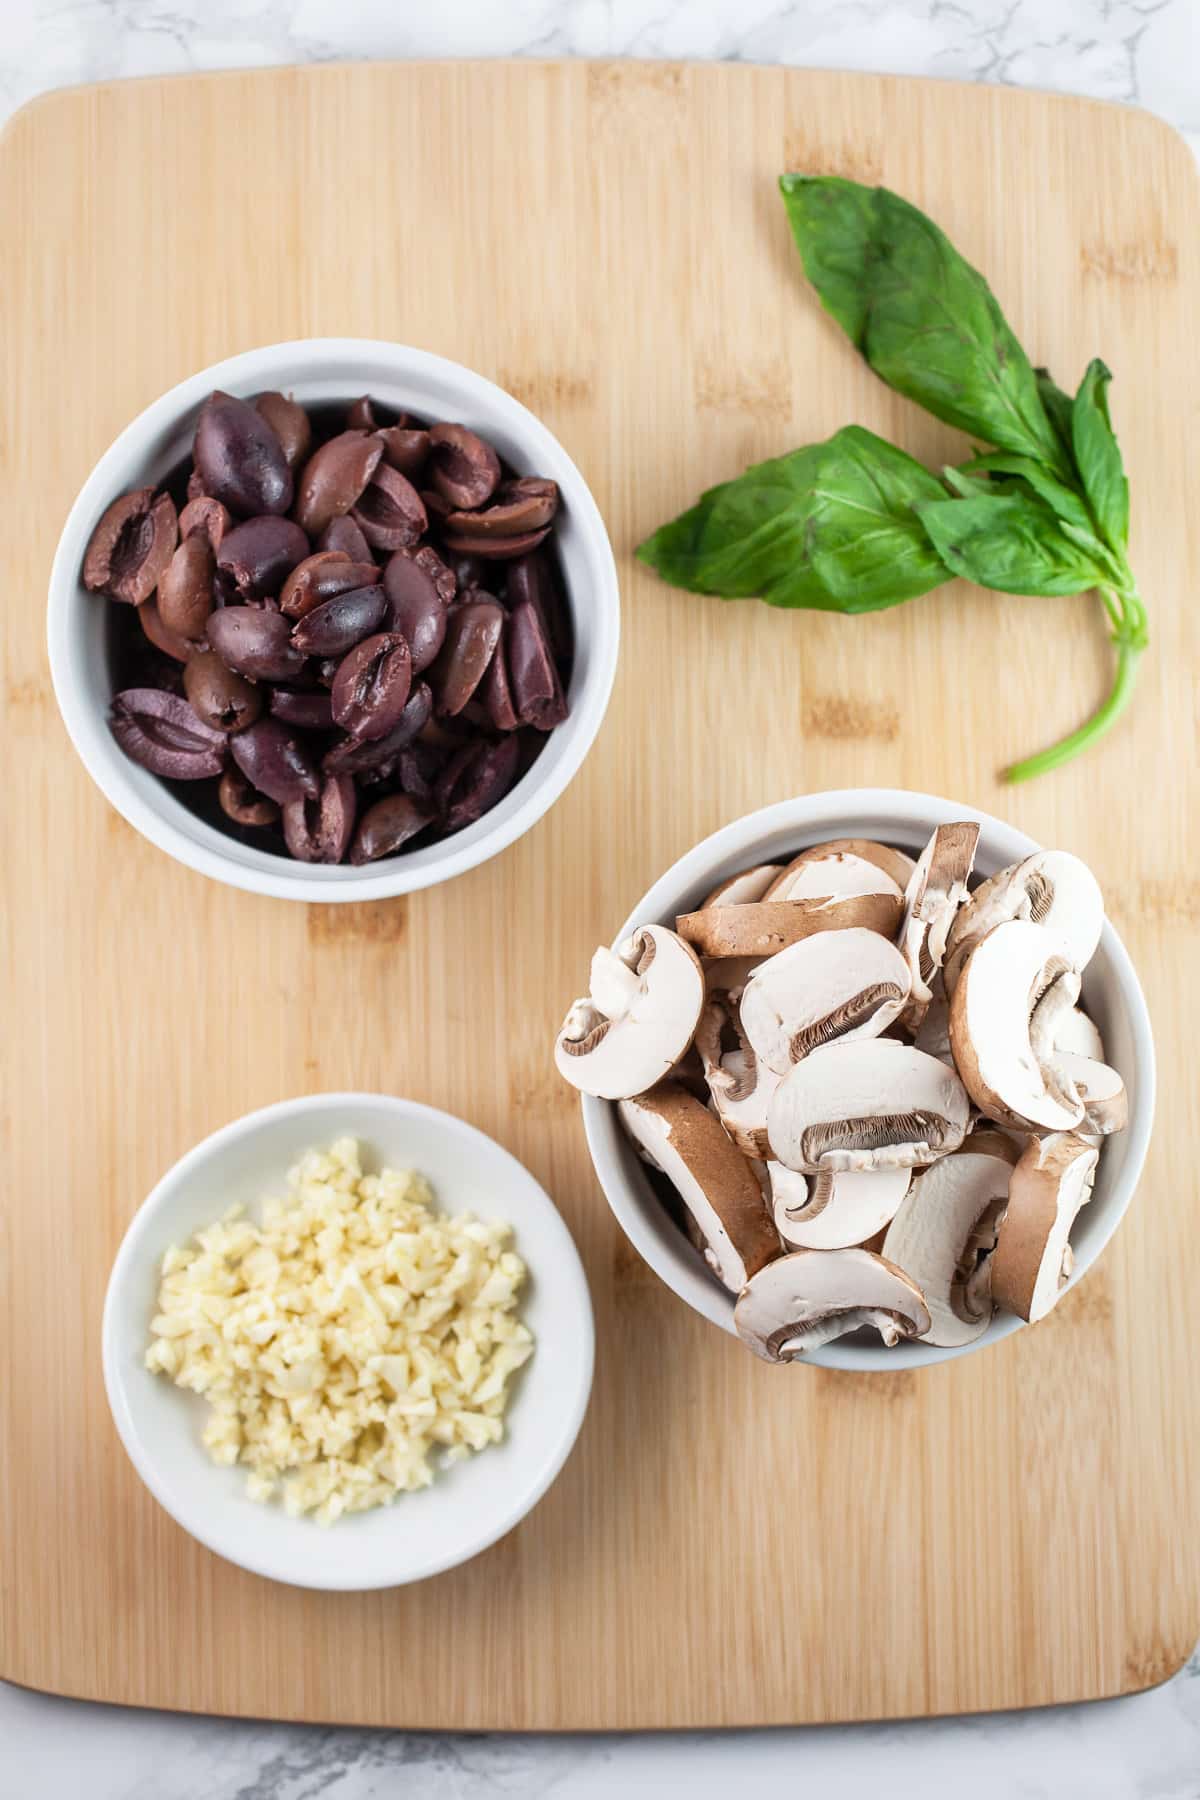 Minced garlic, diced Kalamata olives, sliced mushrooms, and fresh basil on wooden cutting board.